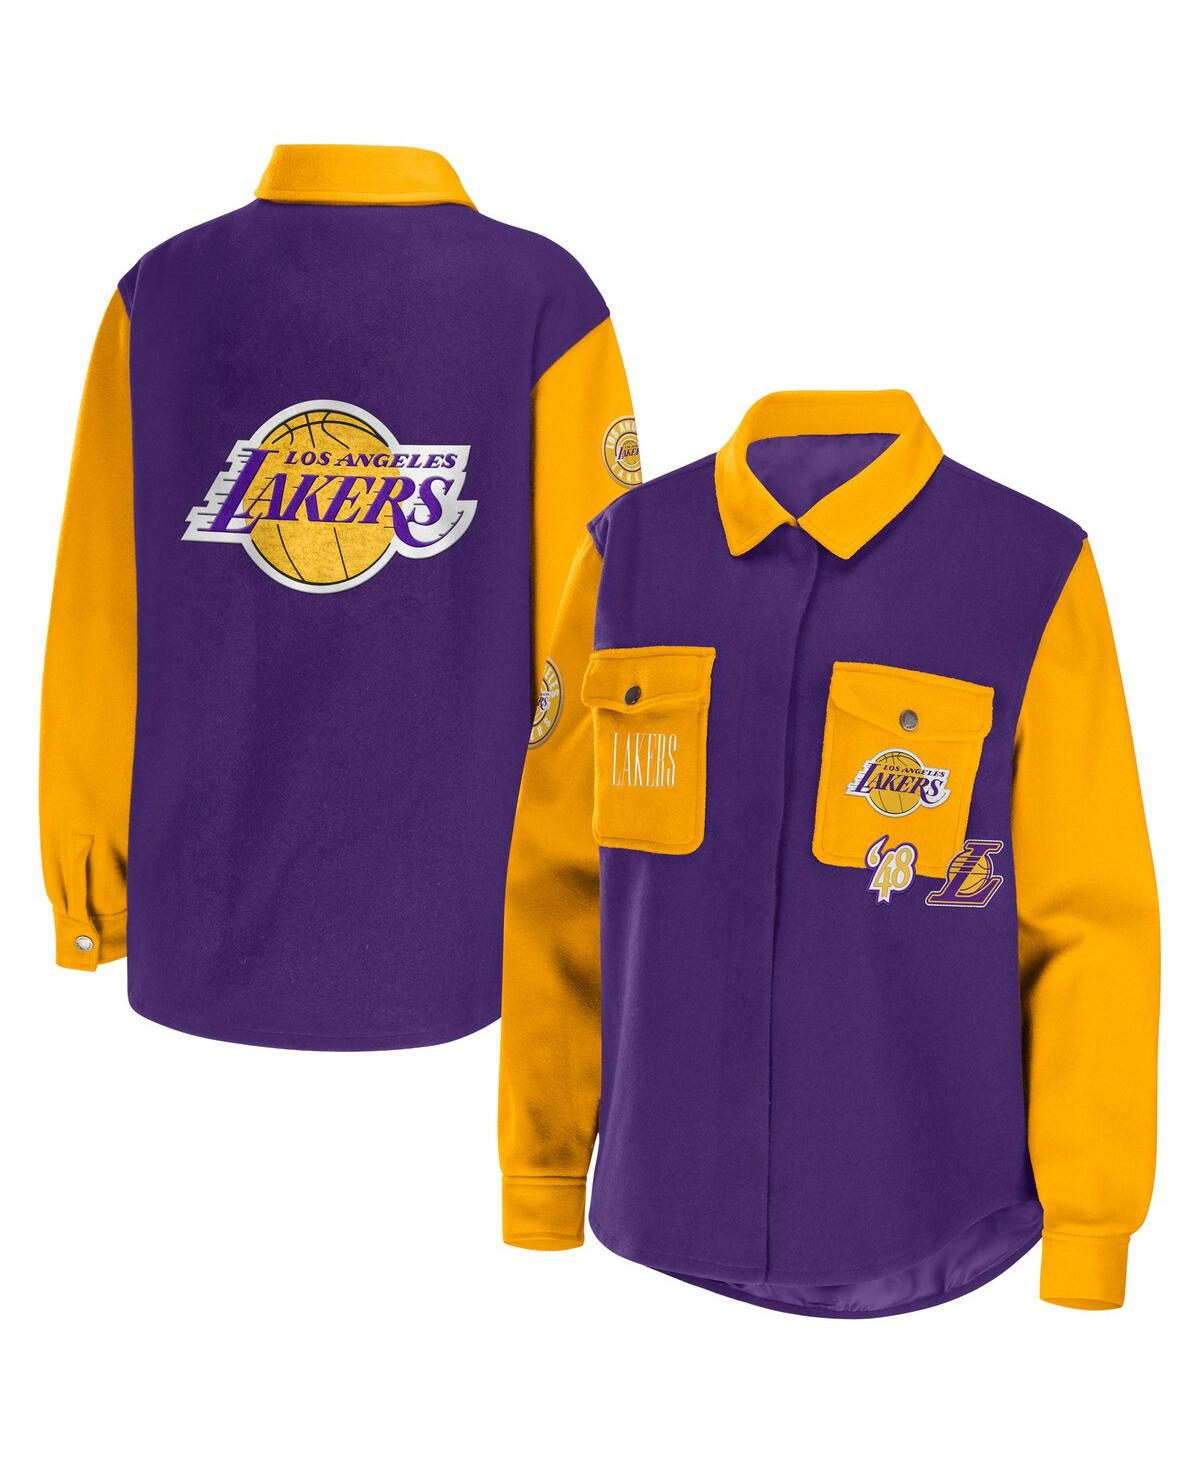 Women's Wear by Erin Andrews Purple Los Angeles Lakers Colorblock Button-Up Shirt Jacket - Purple